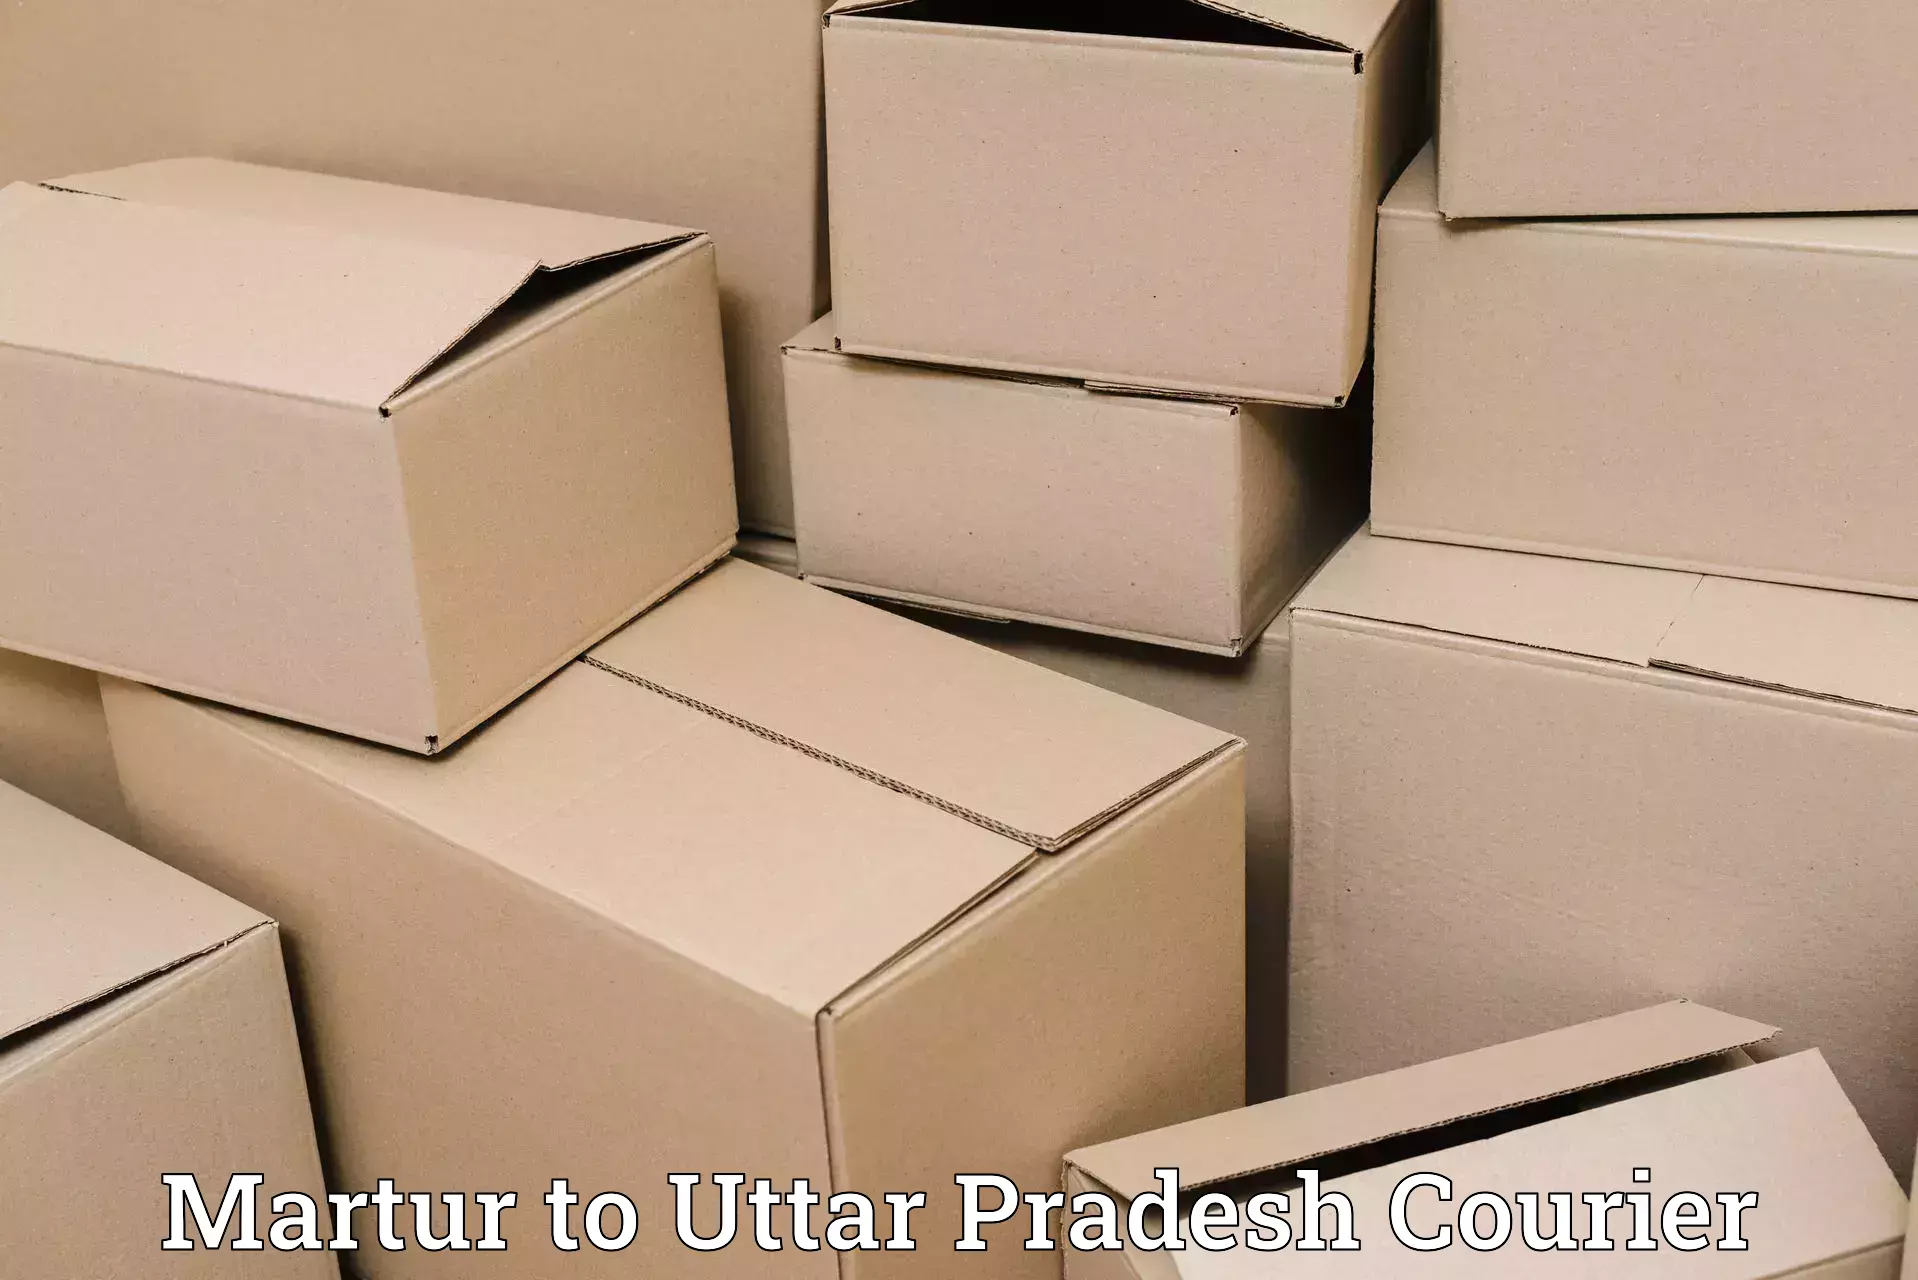 Efficient cargo services Martur to IIIT Lucknow